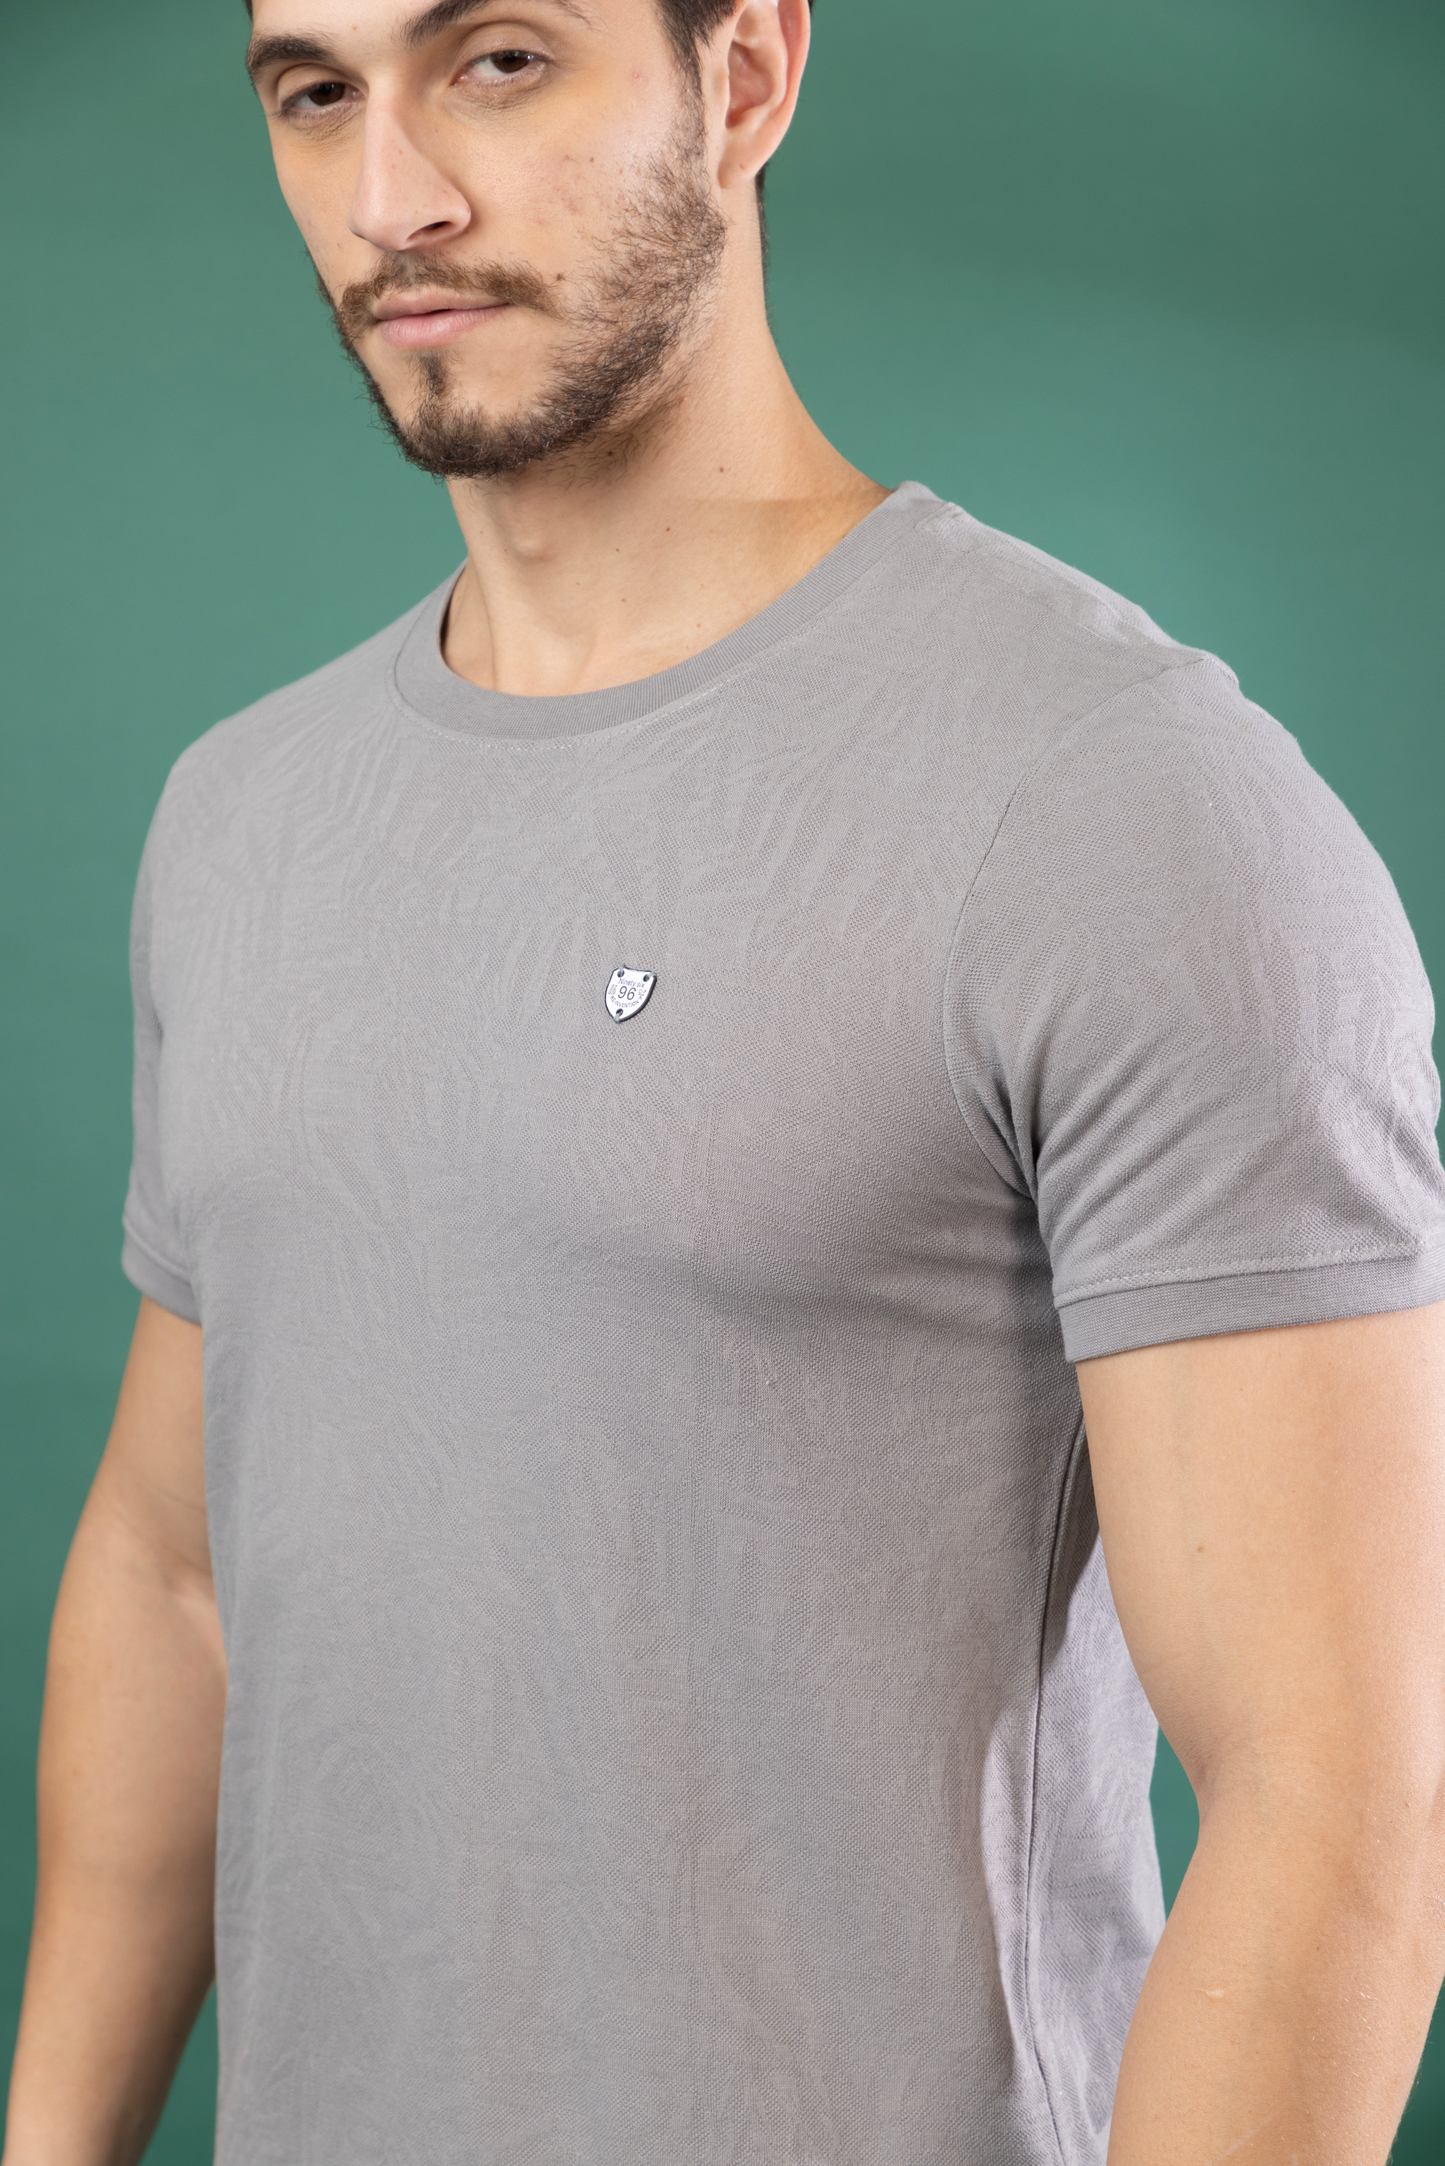 3 Tee's - Simplicity Round Neck T-Shirt Combo